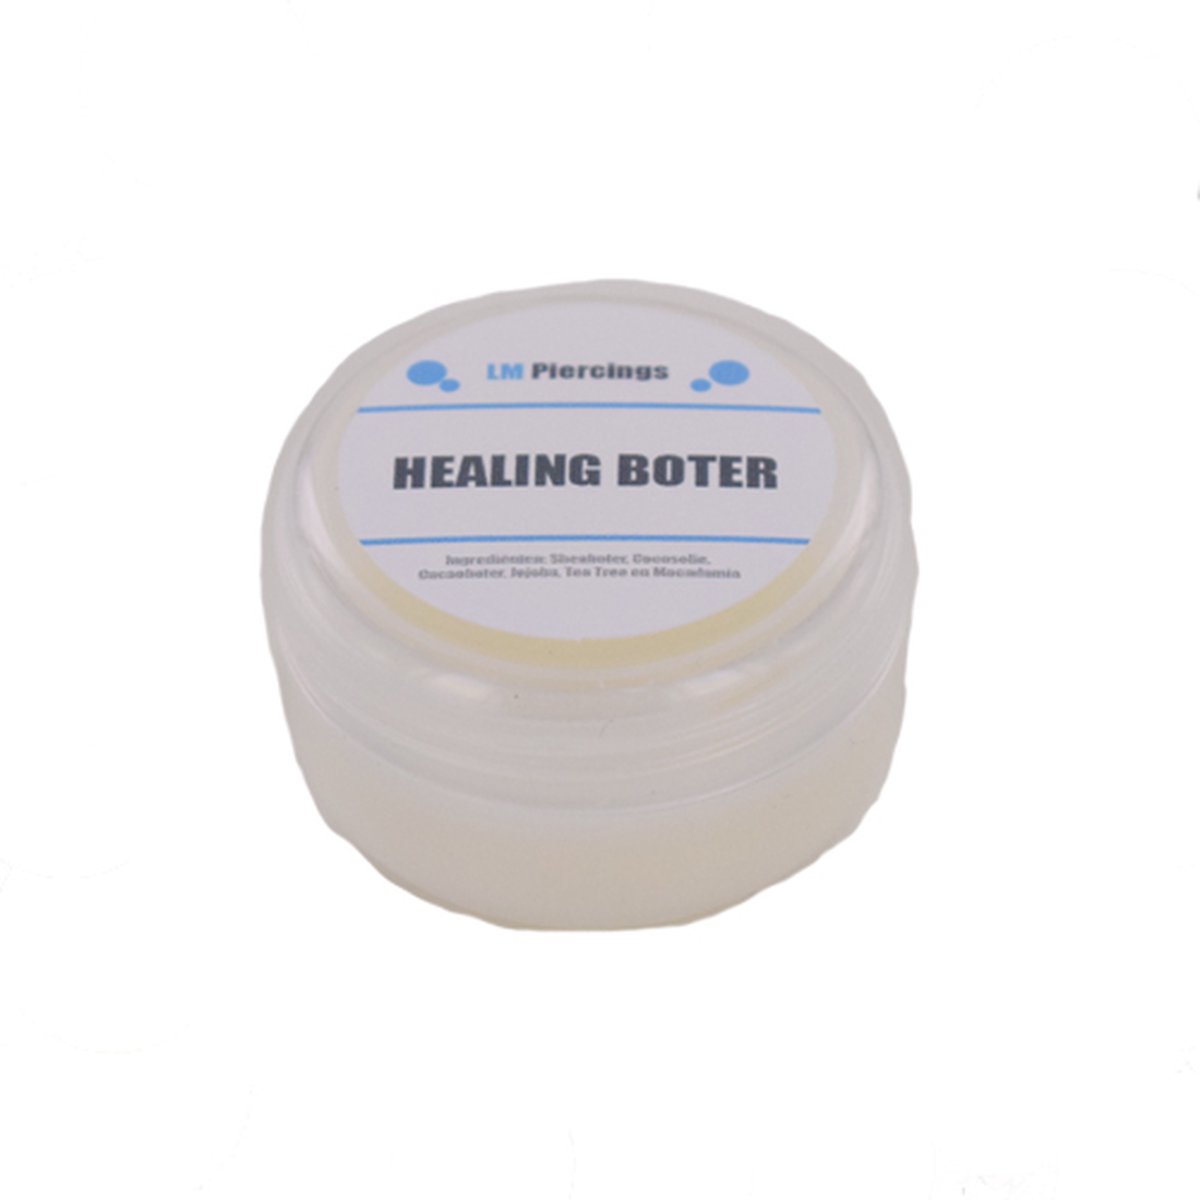 Healing boter - LMPiercings NL